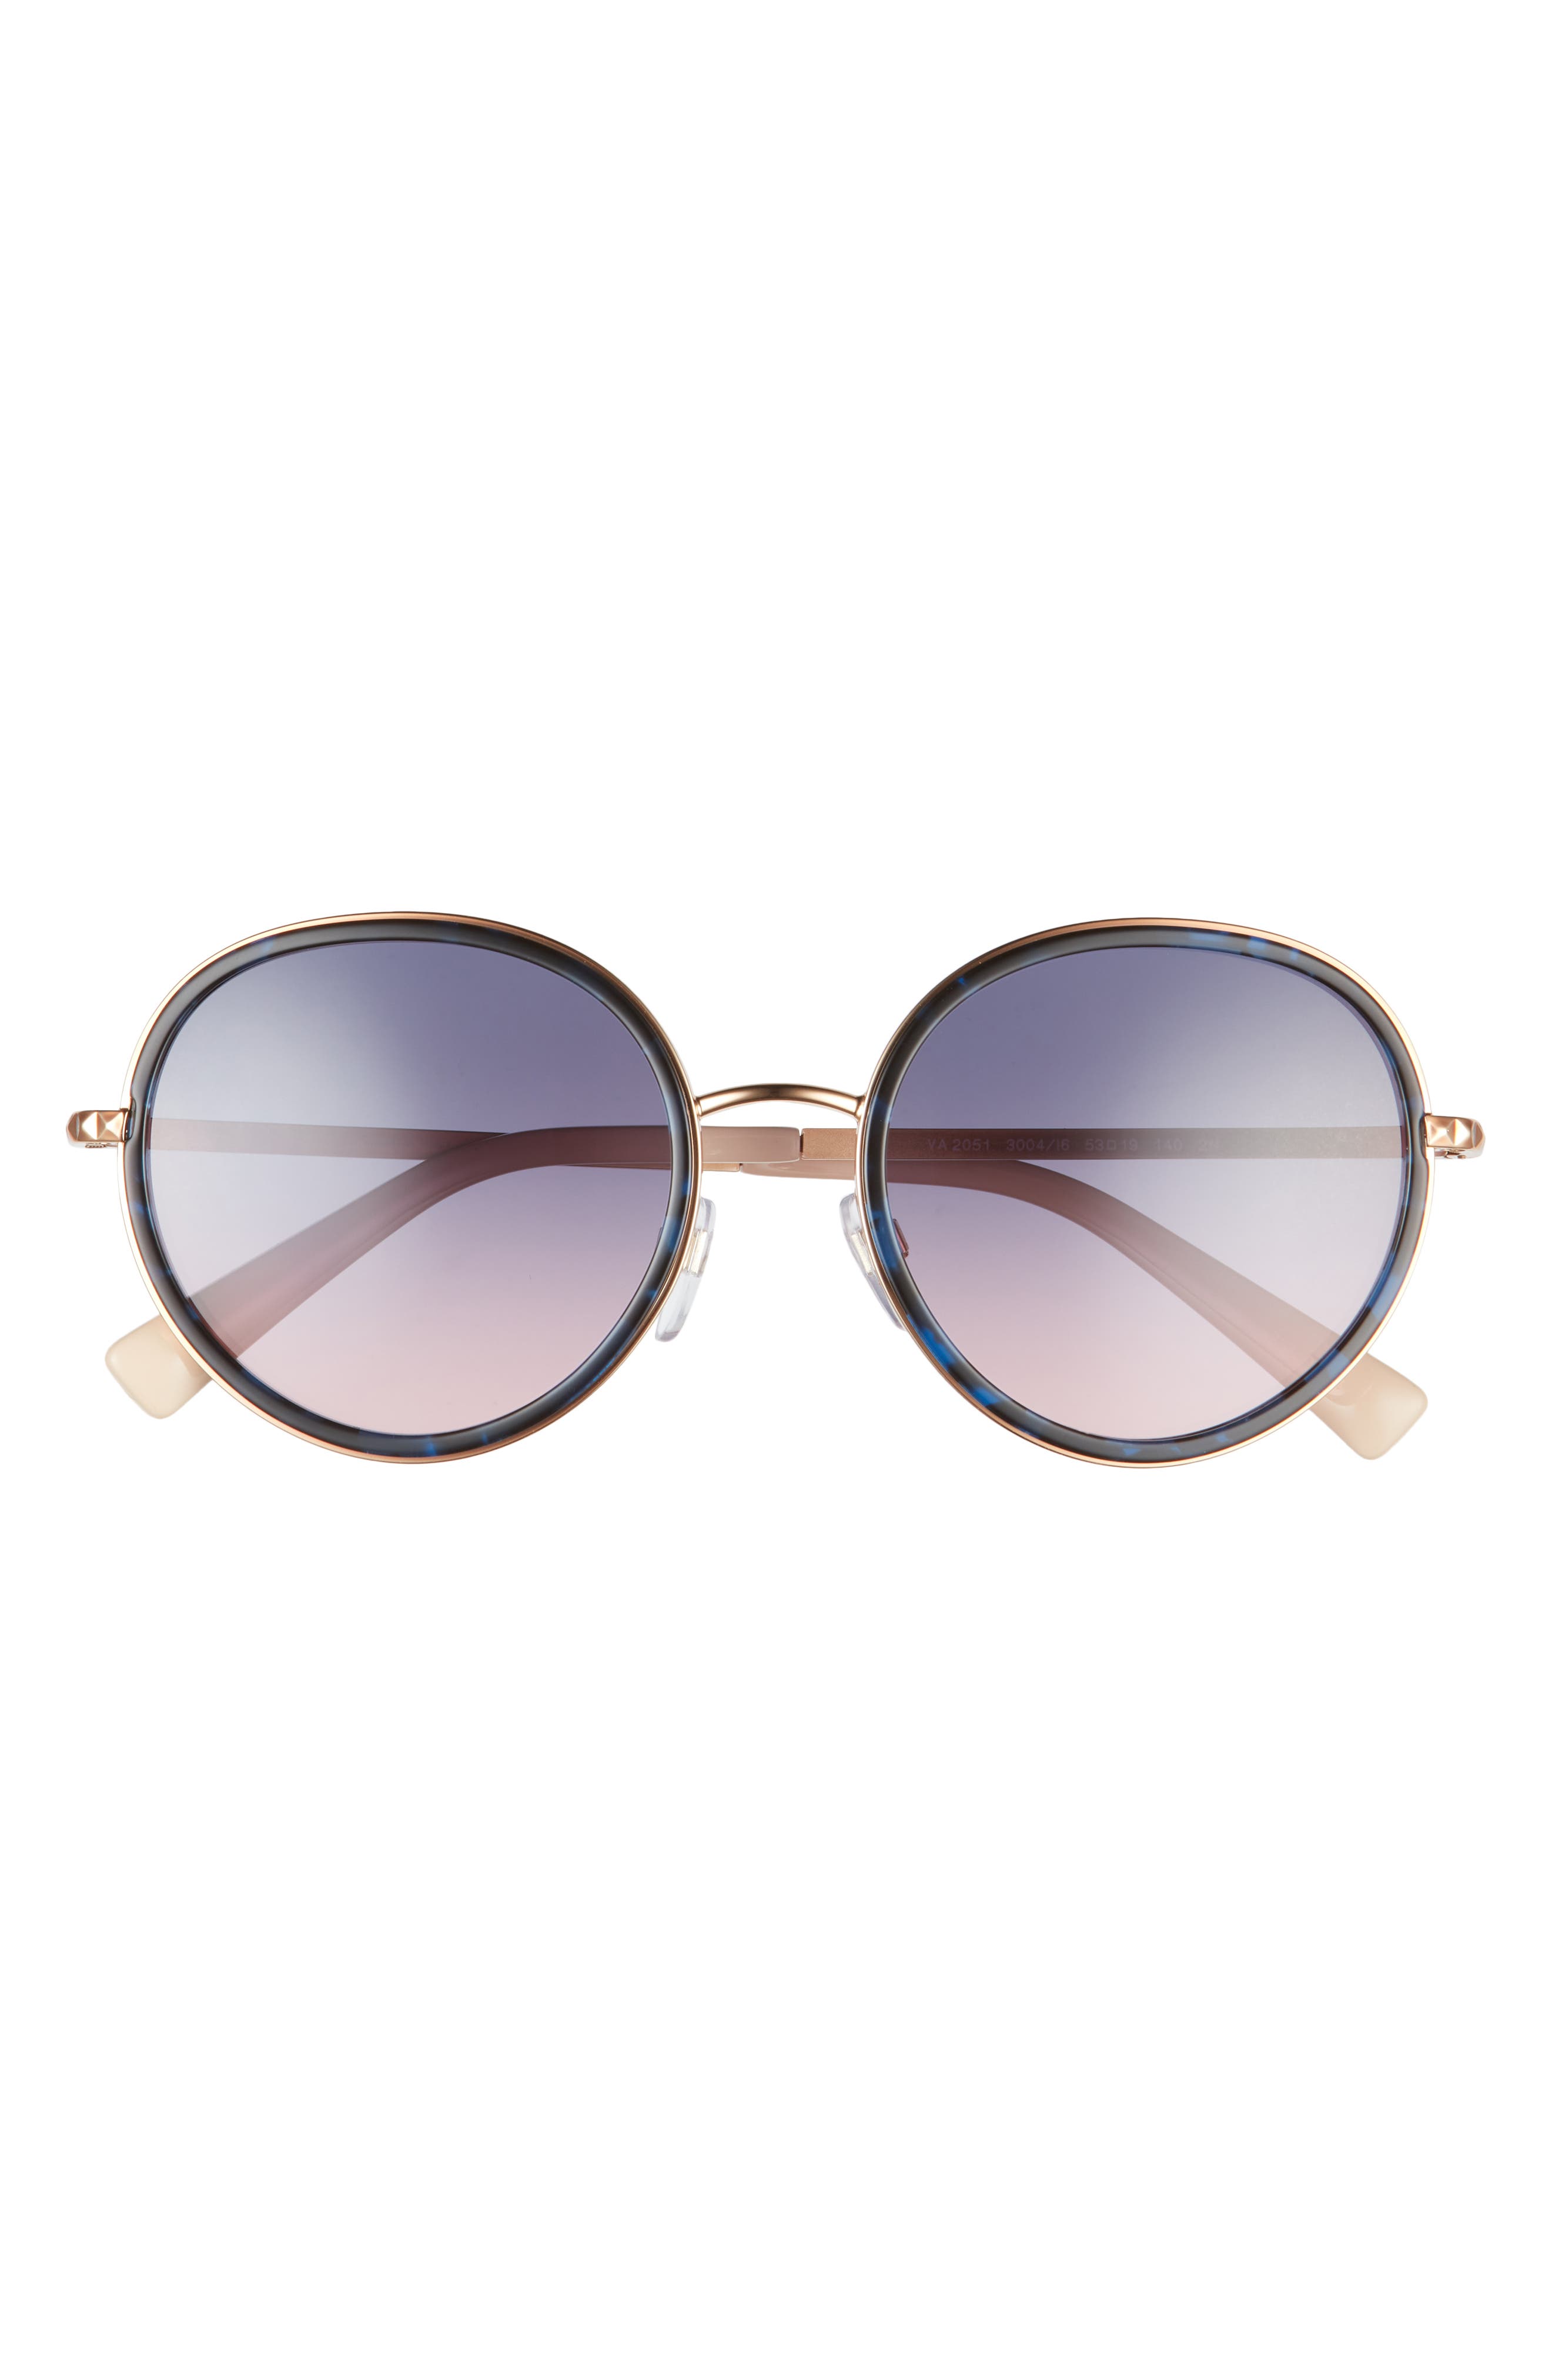 Valentino Phantos 53mm Sunglasses in Blue Havana/Gradient Blue at Nordstrom